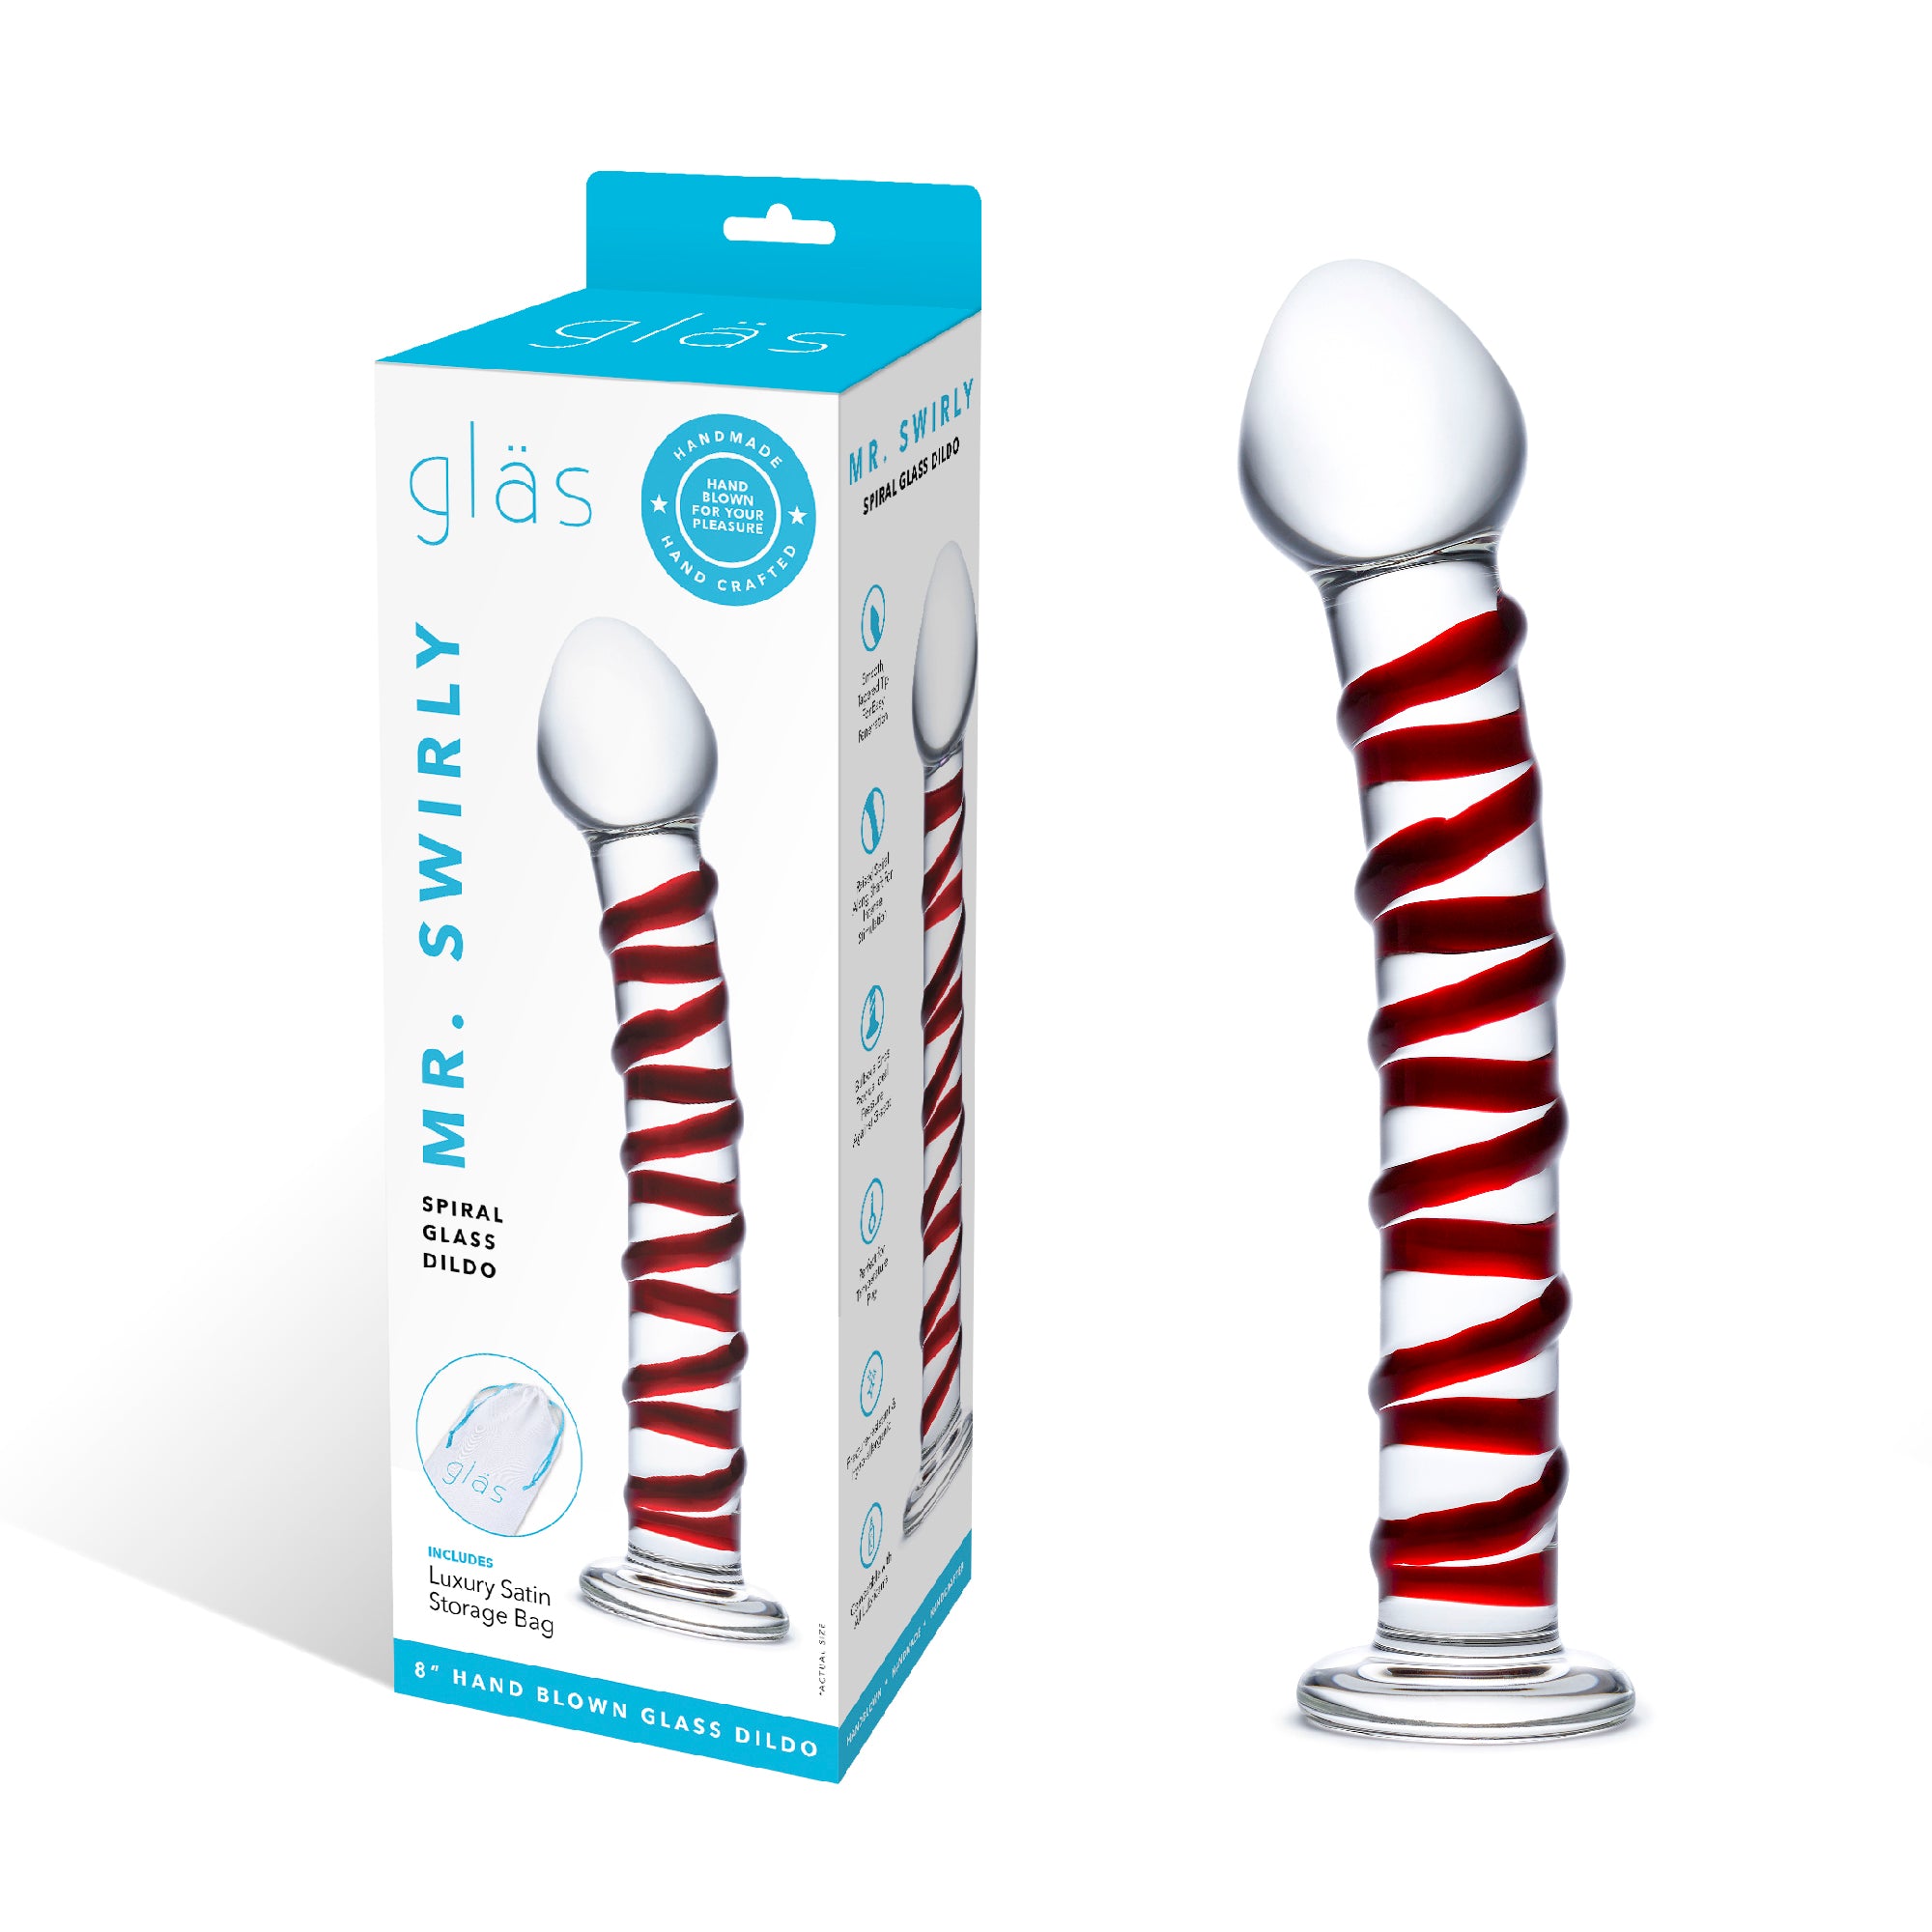 Packaging of the Gläs Mr. Swirly Glass Dildo